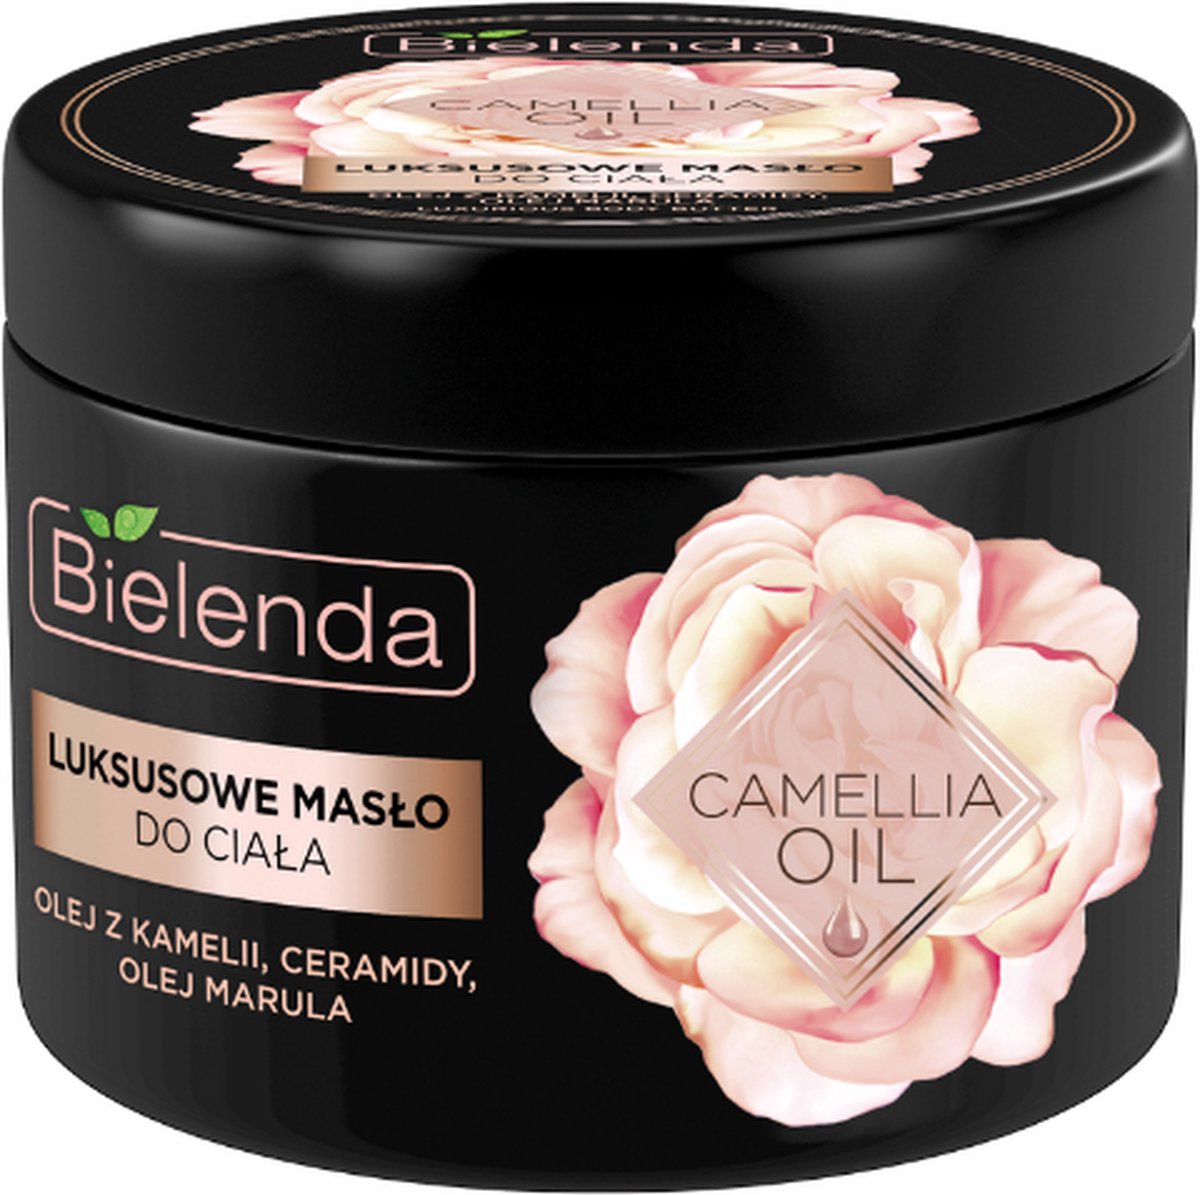 Bielenda - Camellia Oil Luxury Body Butter 200Ml